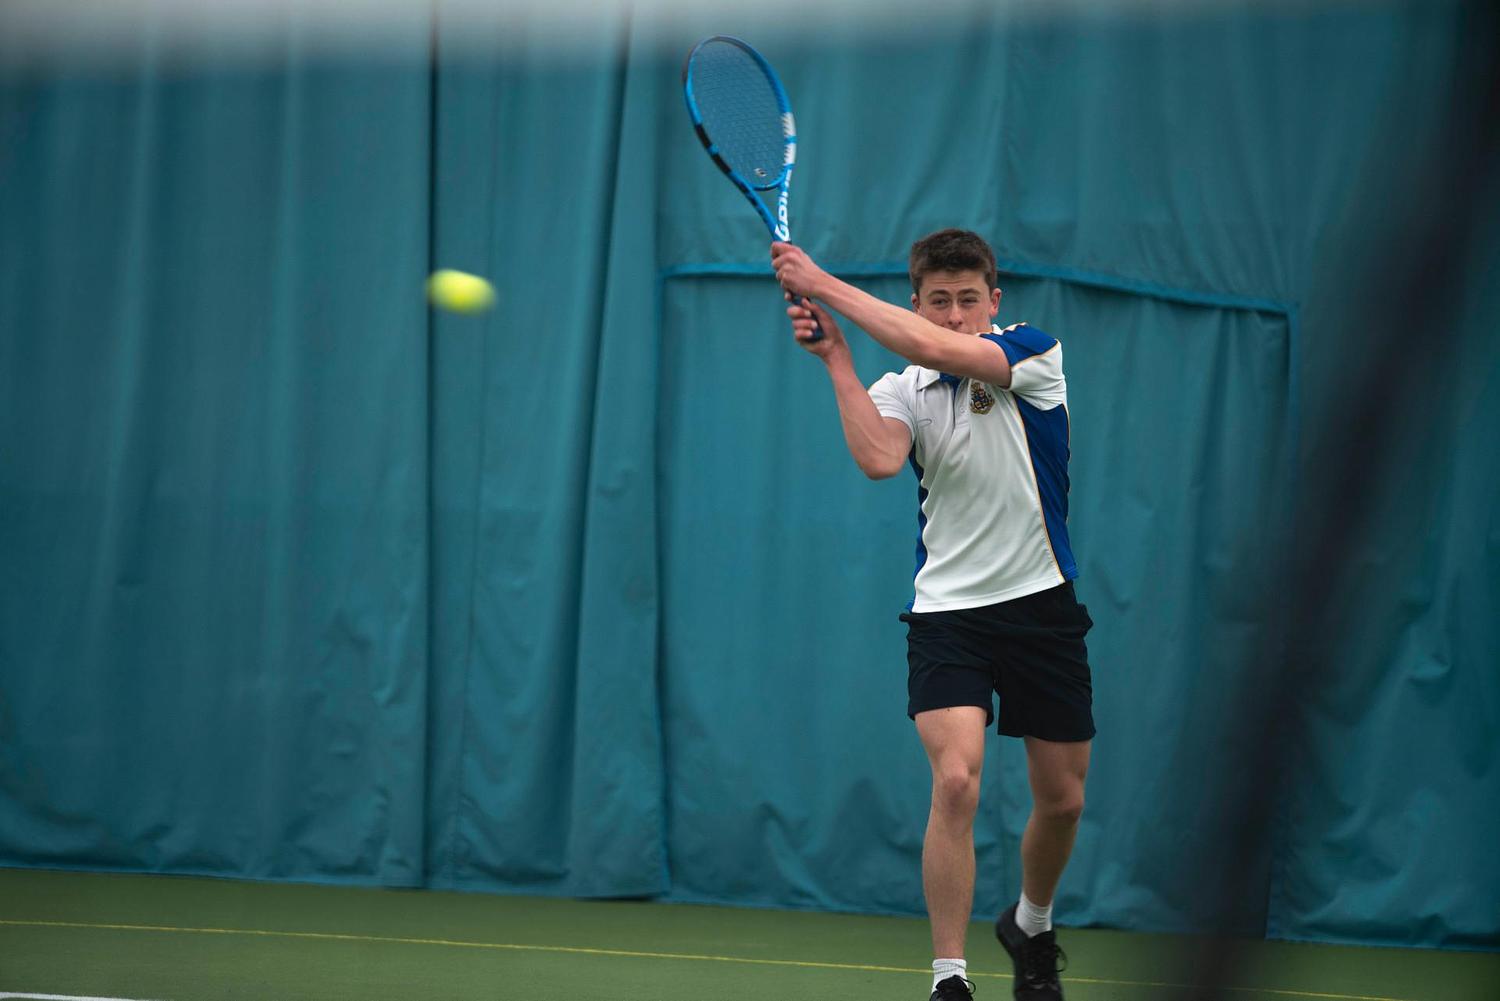 Strathallan named Tennis Scotland School of the Year